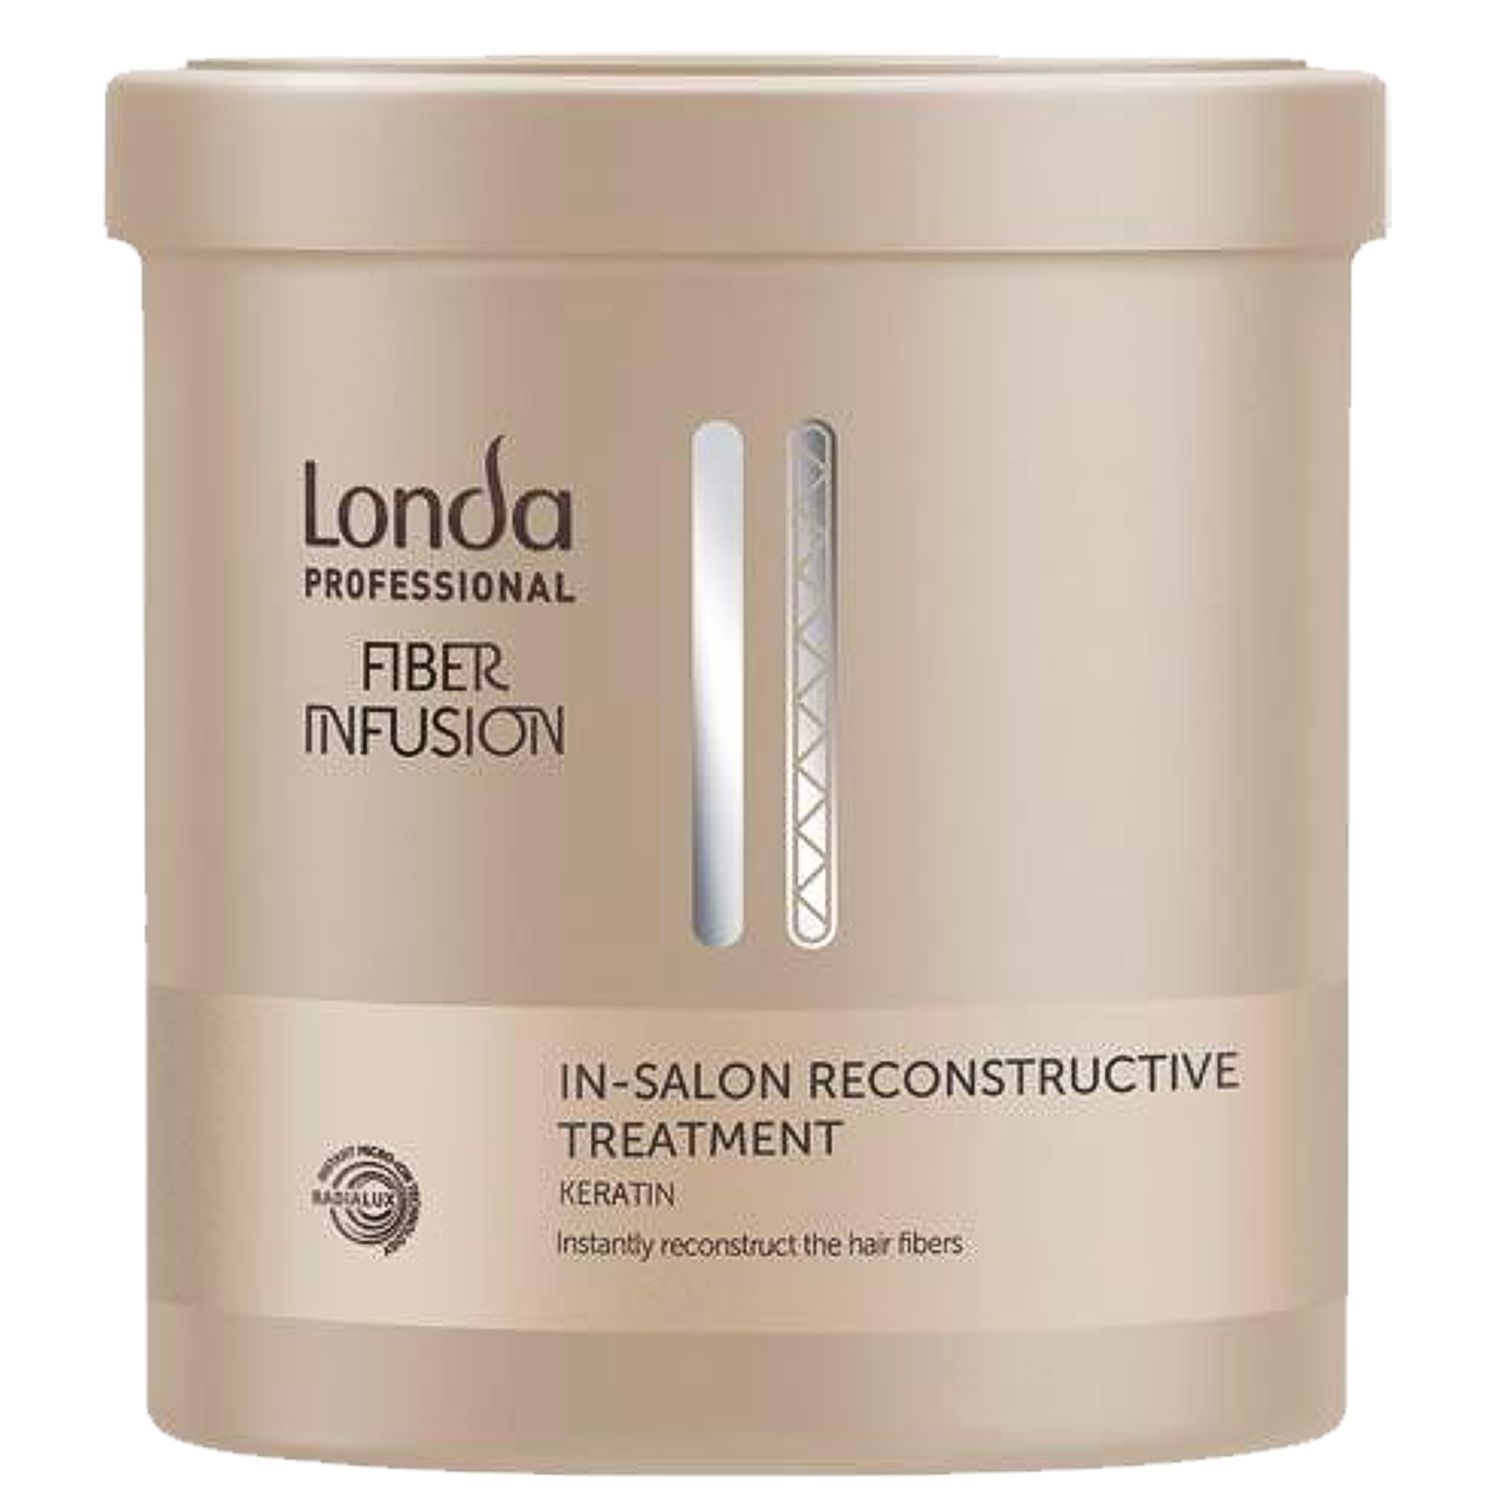 Londa FIBER INFUSION In-Salon Reconstructive Treatment 750 ml